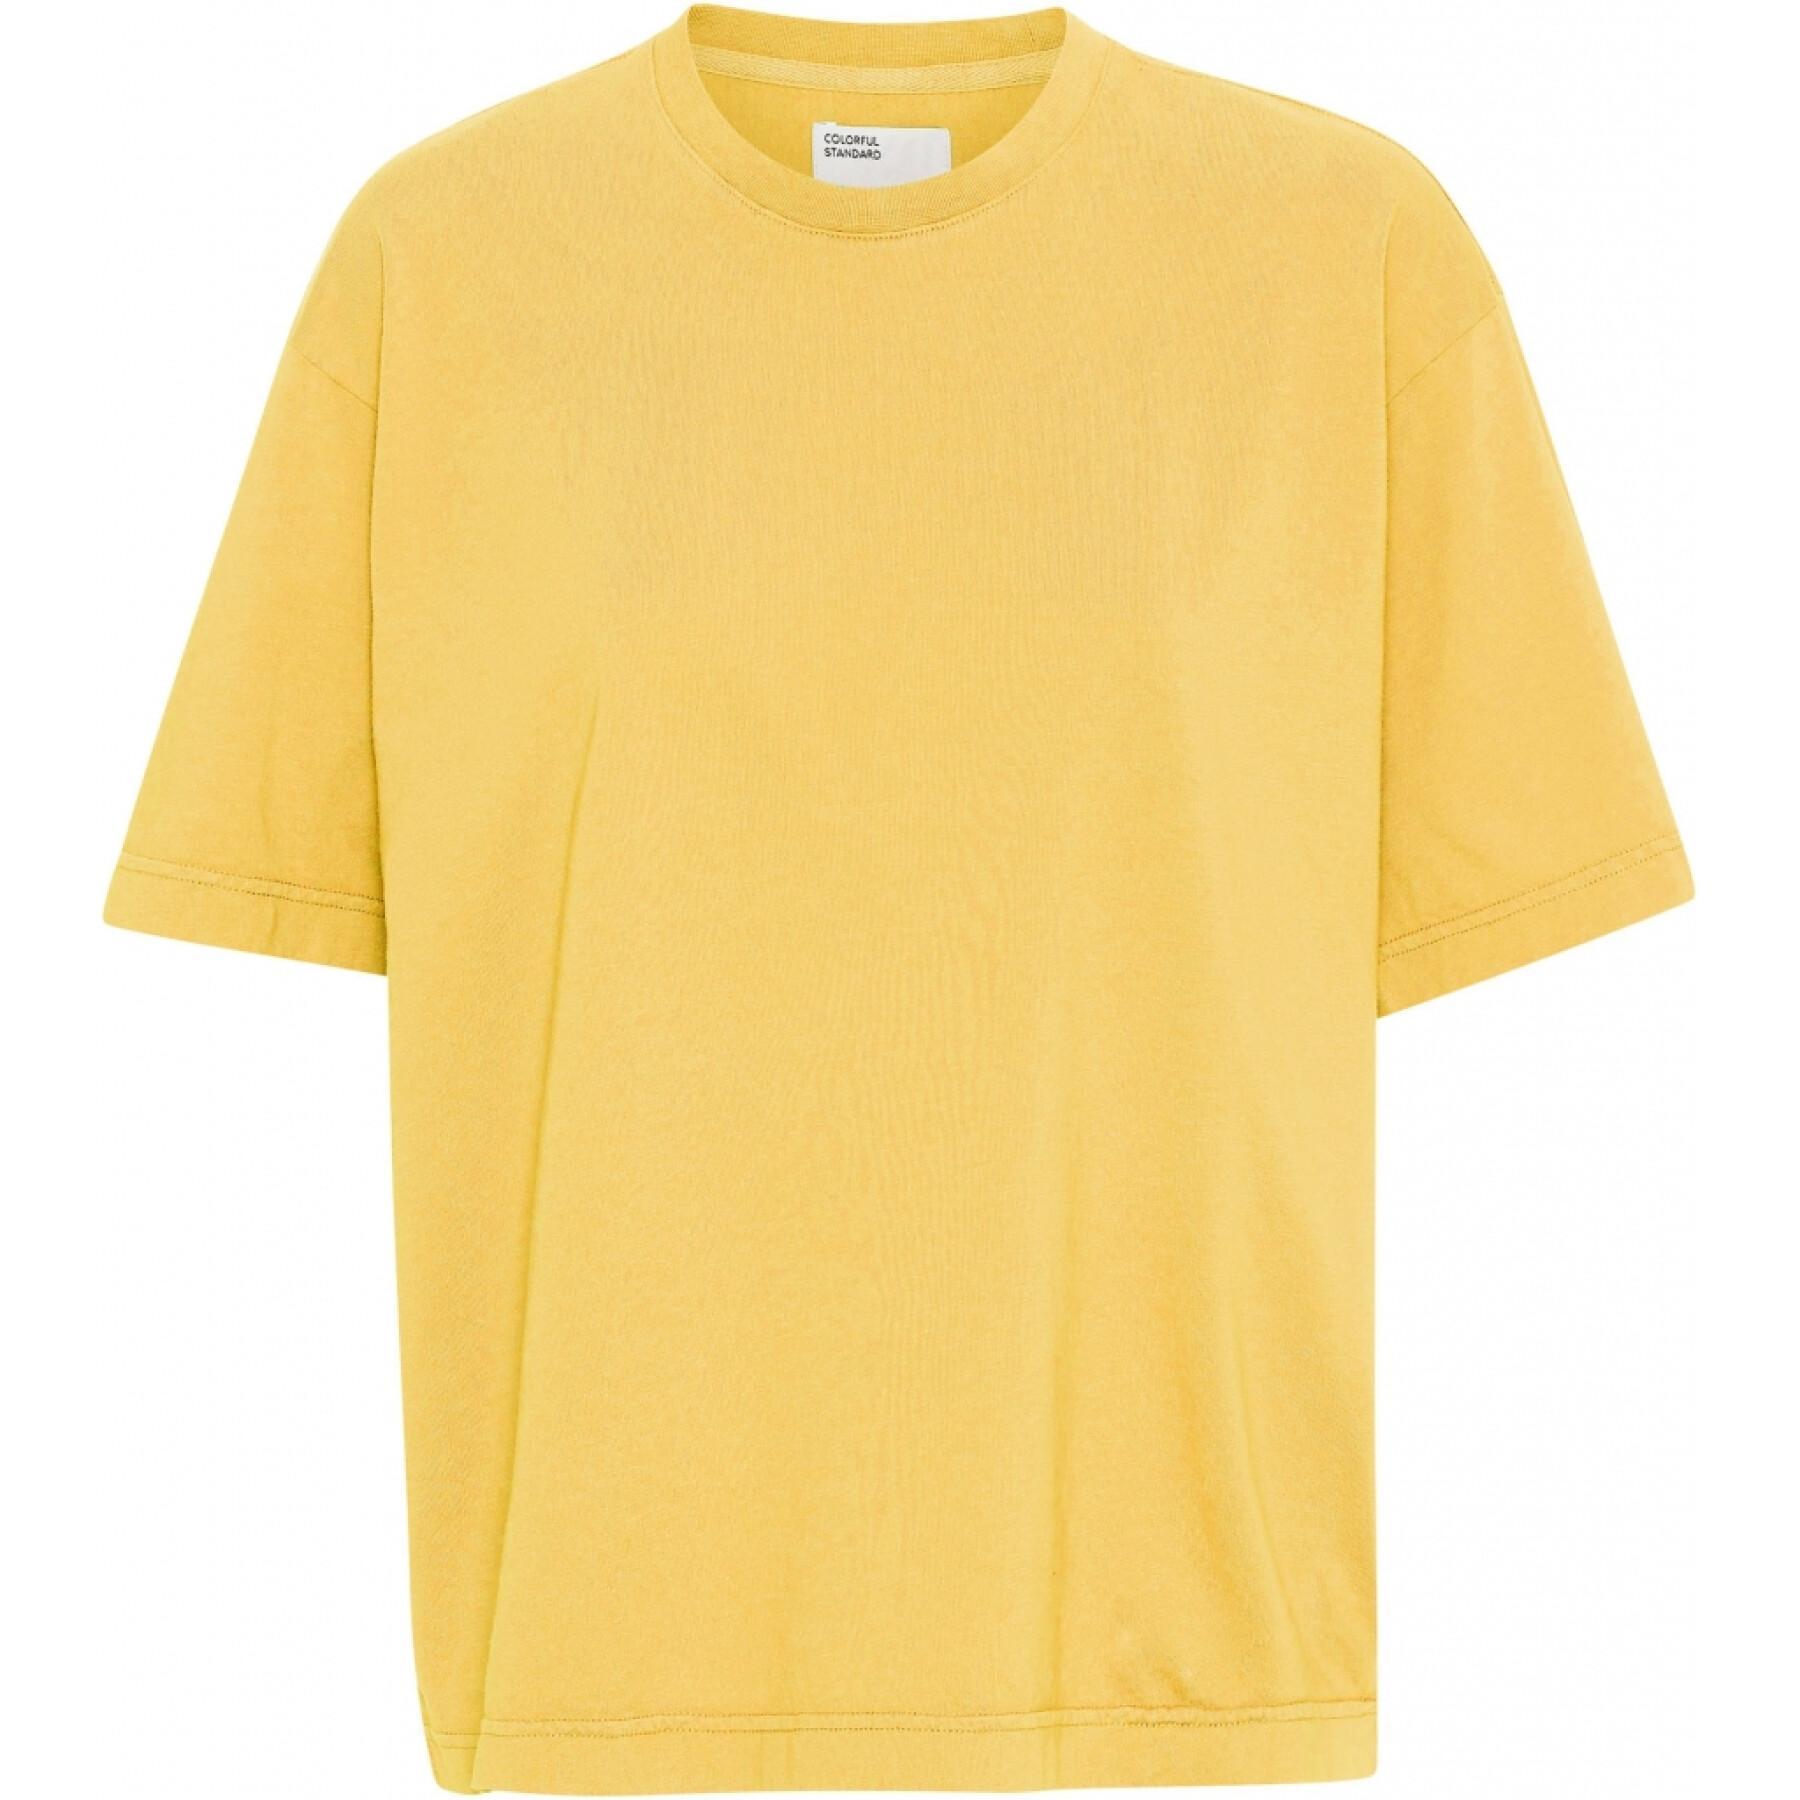 Women's T-shirt Colorful Standard Organic oversized lemon yellow